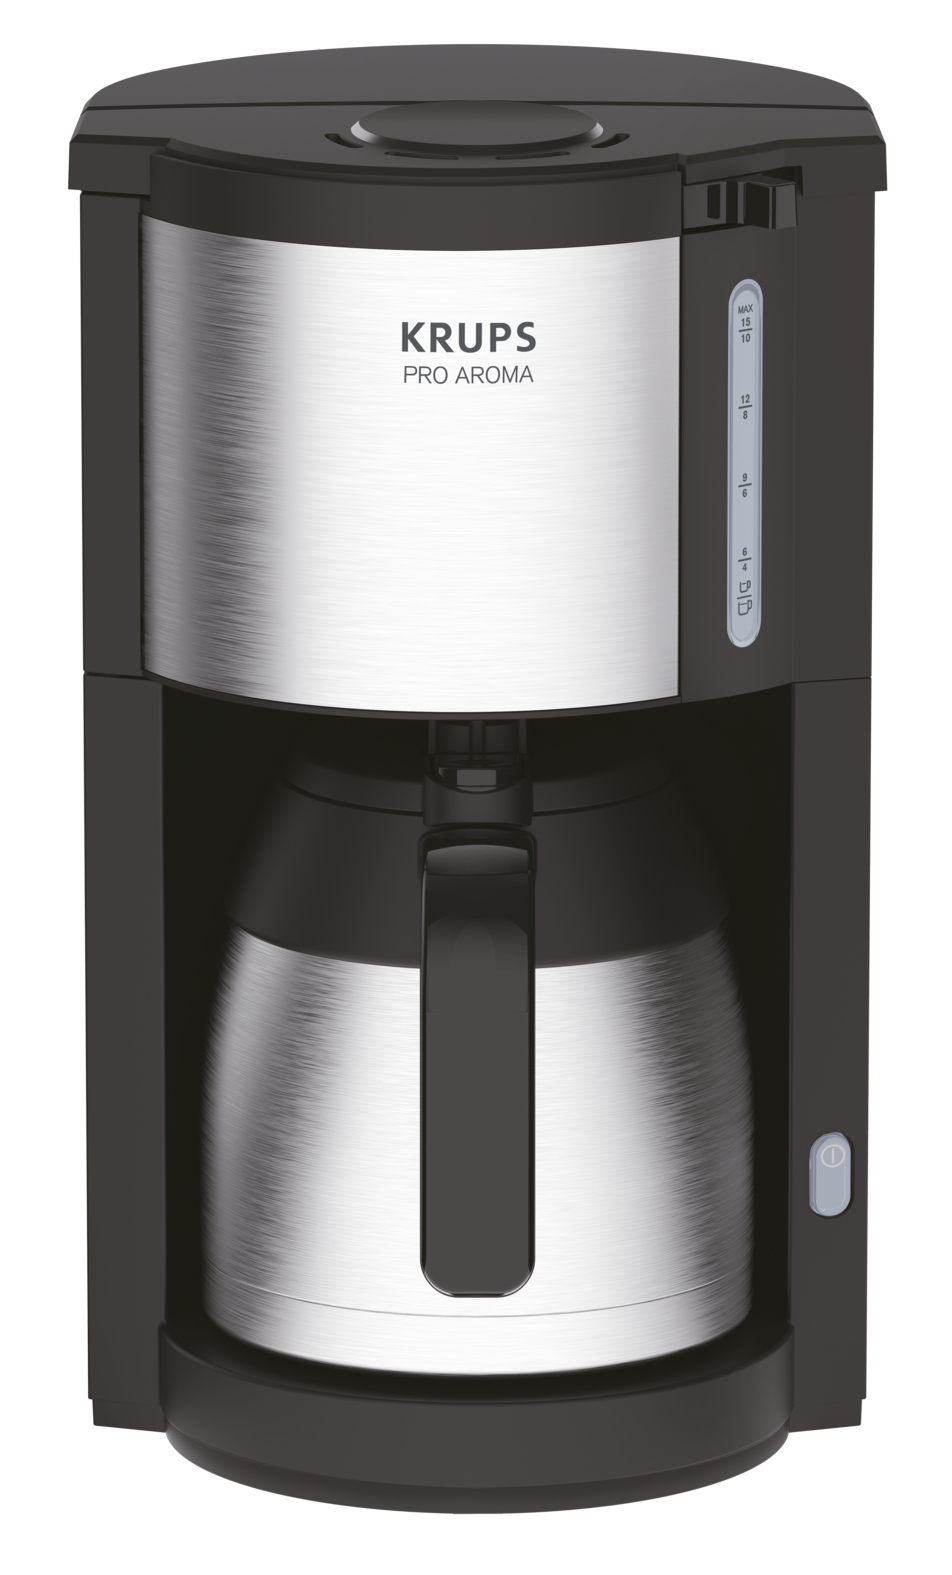 Krups Pro Aroma KM305D coffee maker